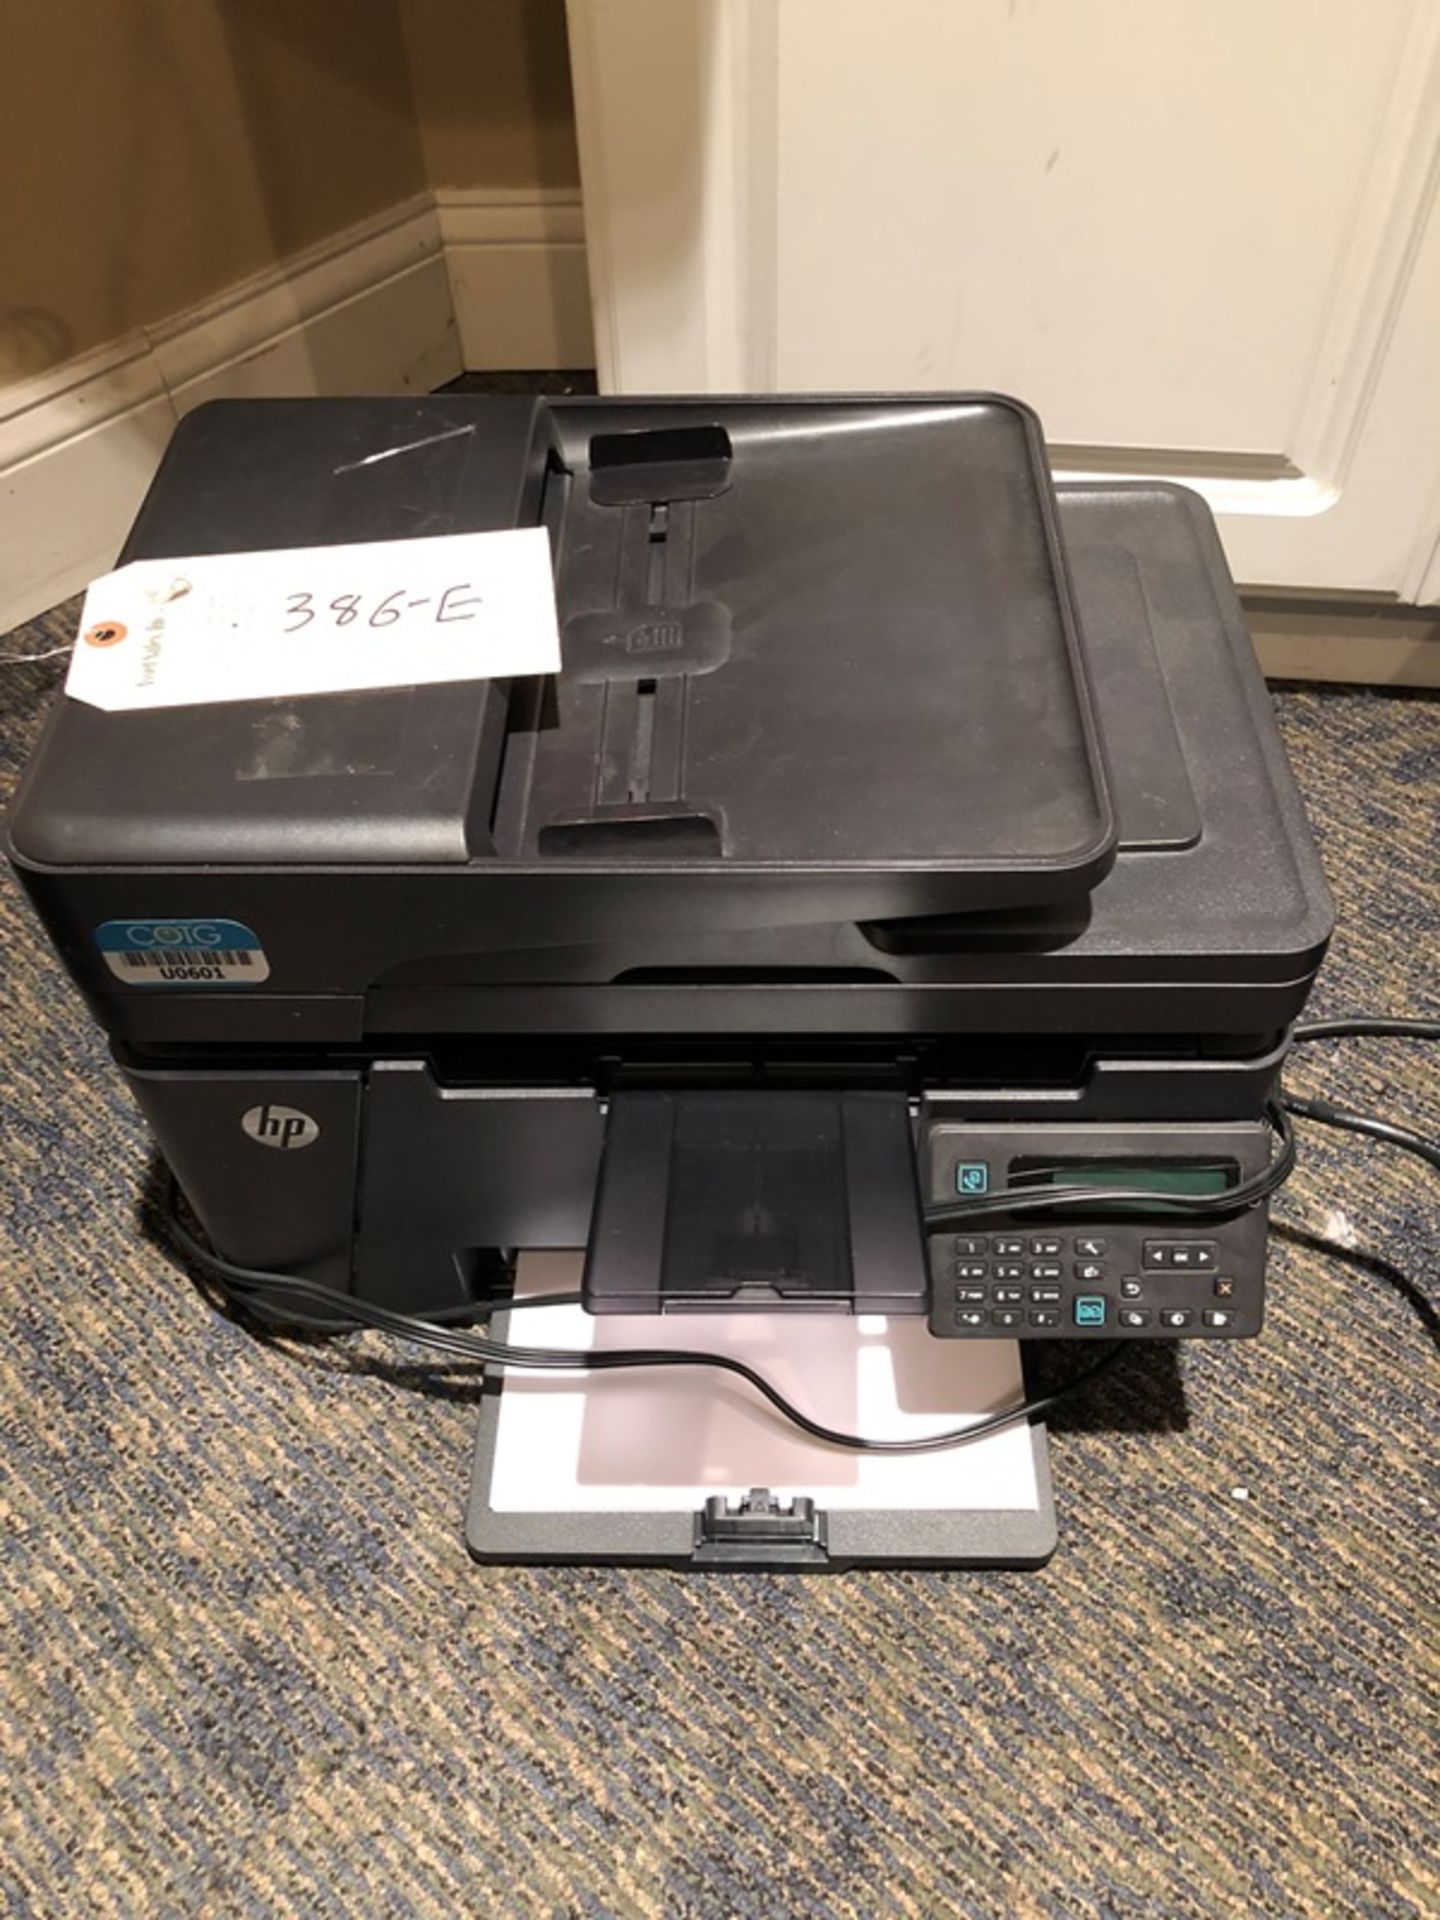 HP LaserJet Pro M127fn Multi Function Printer*located Orland Park, IL